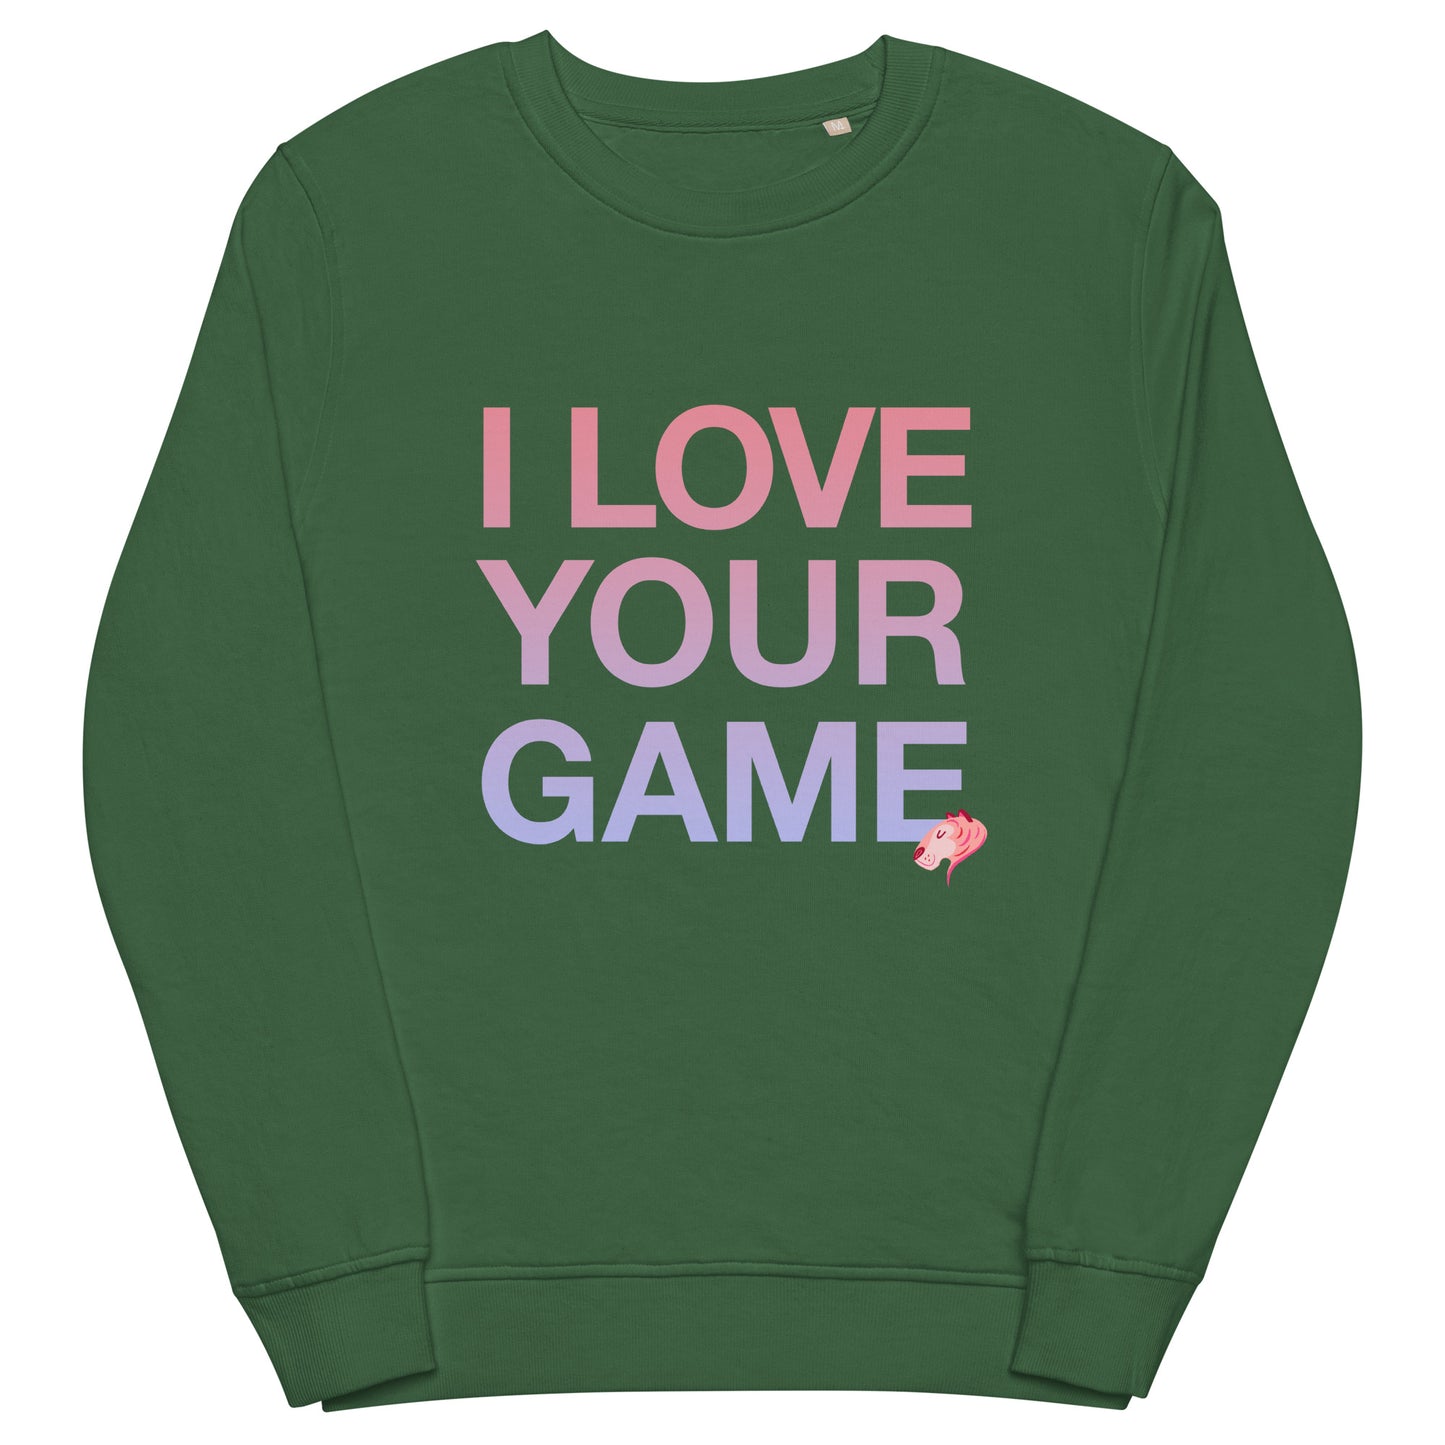 I LOVE YOU(R) GAME Unisex organic sweatshirt